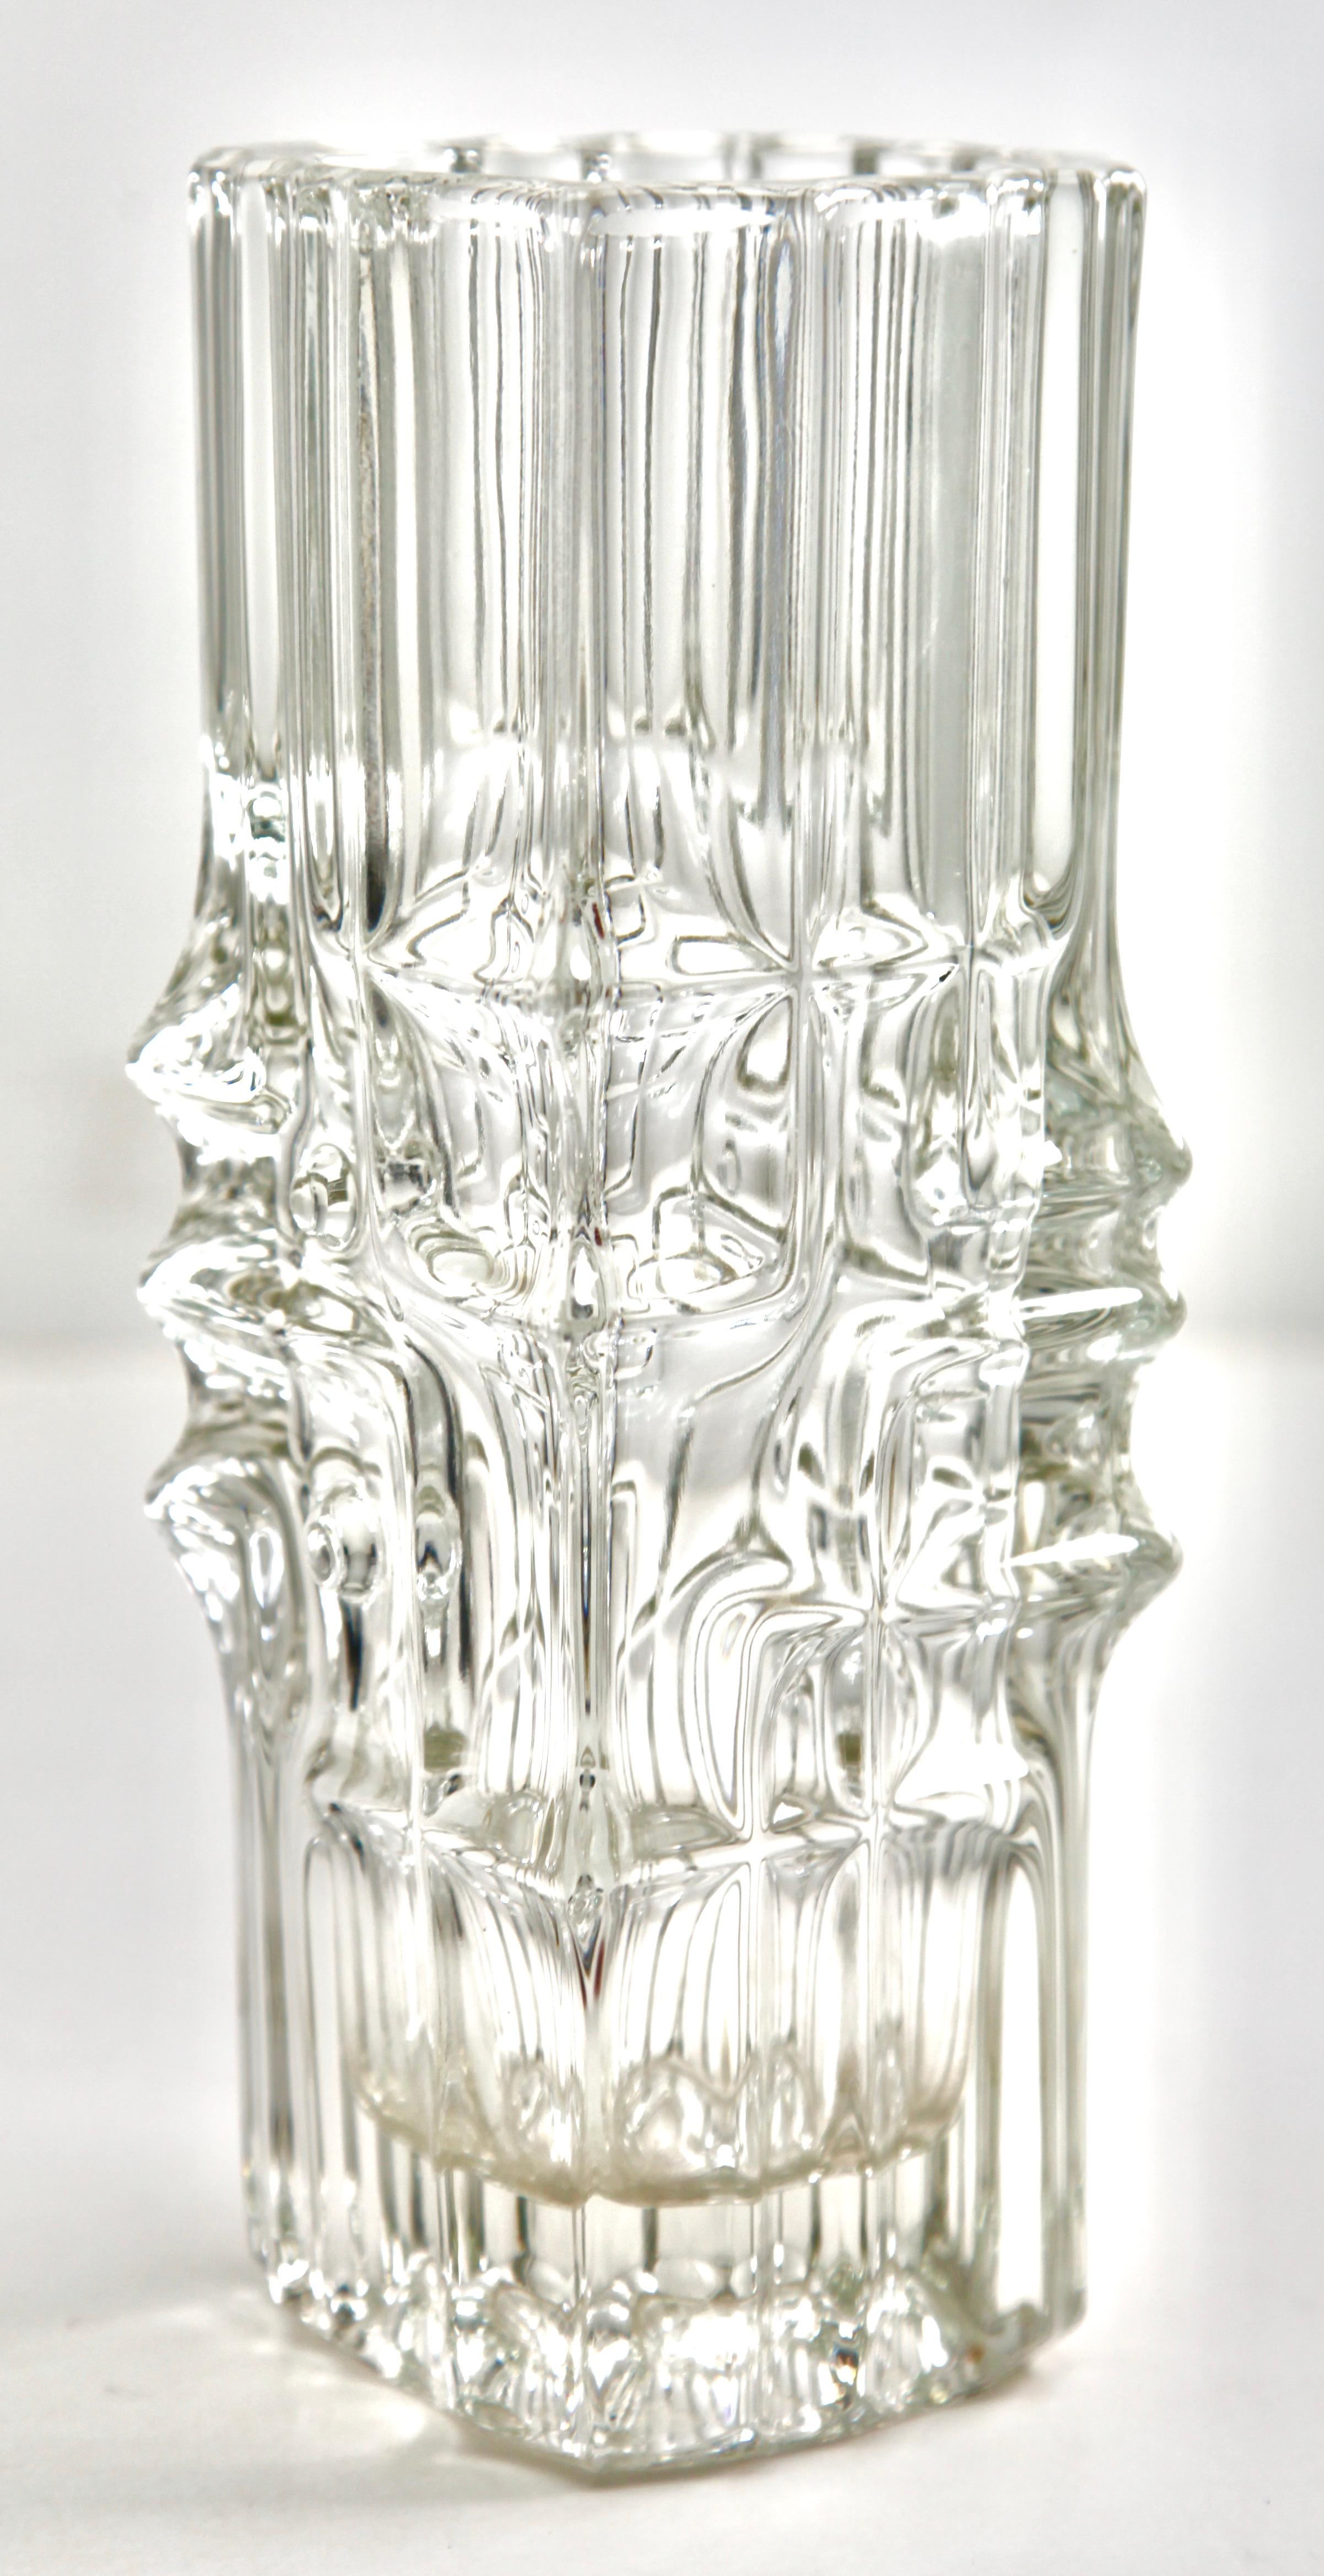 Molded Ice Melting Vase 617 by Vladislaw Urban for Rosice Glass Tsjechoslowakia, 1968 For Sale